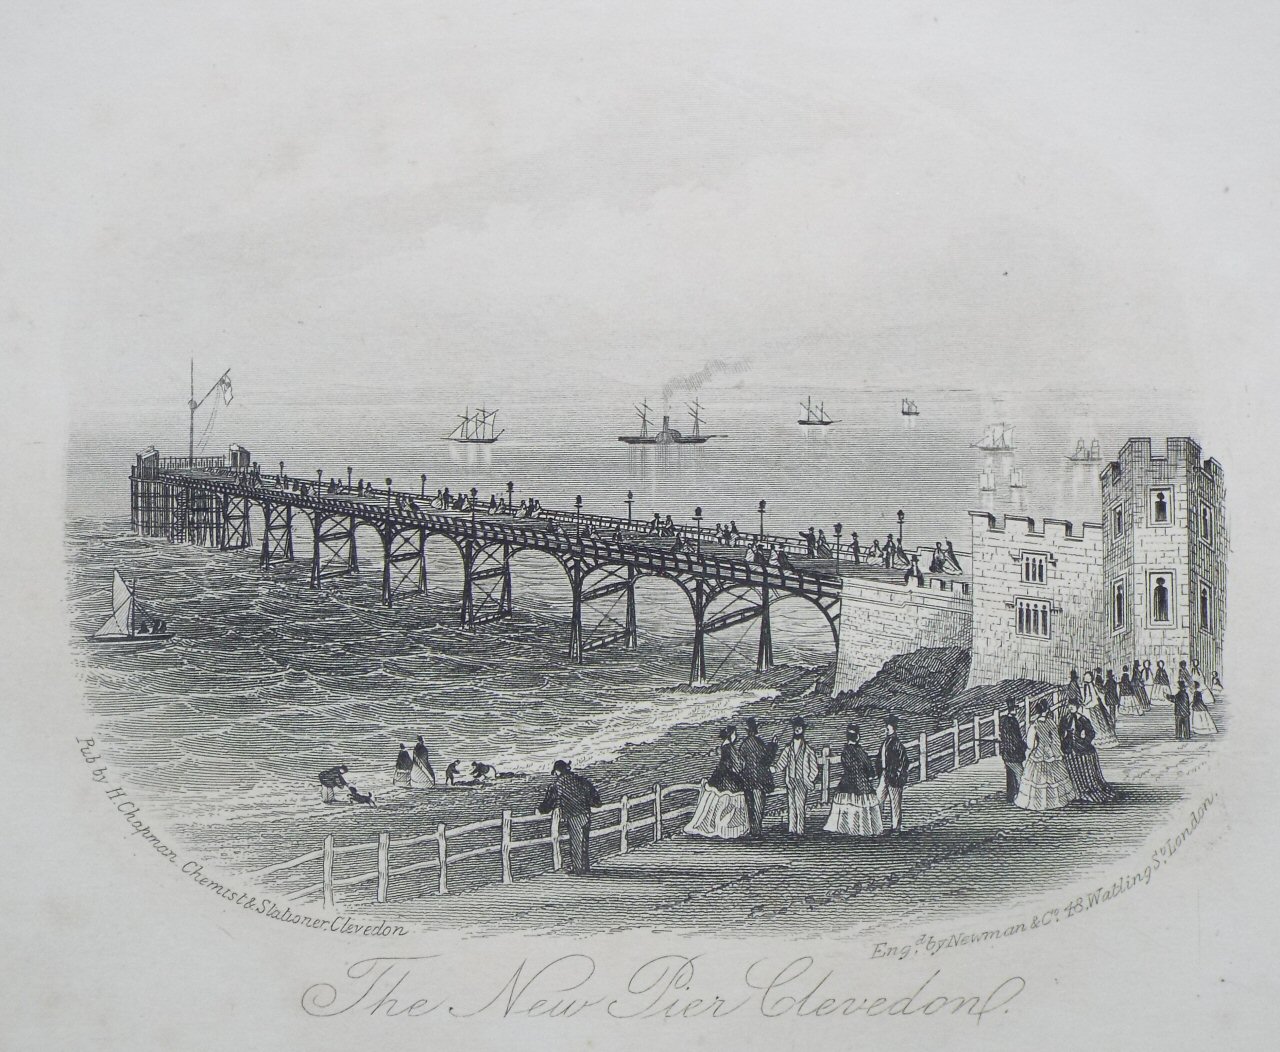 Steel Vignette - The New Pier, Clevedon - Newman